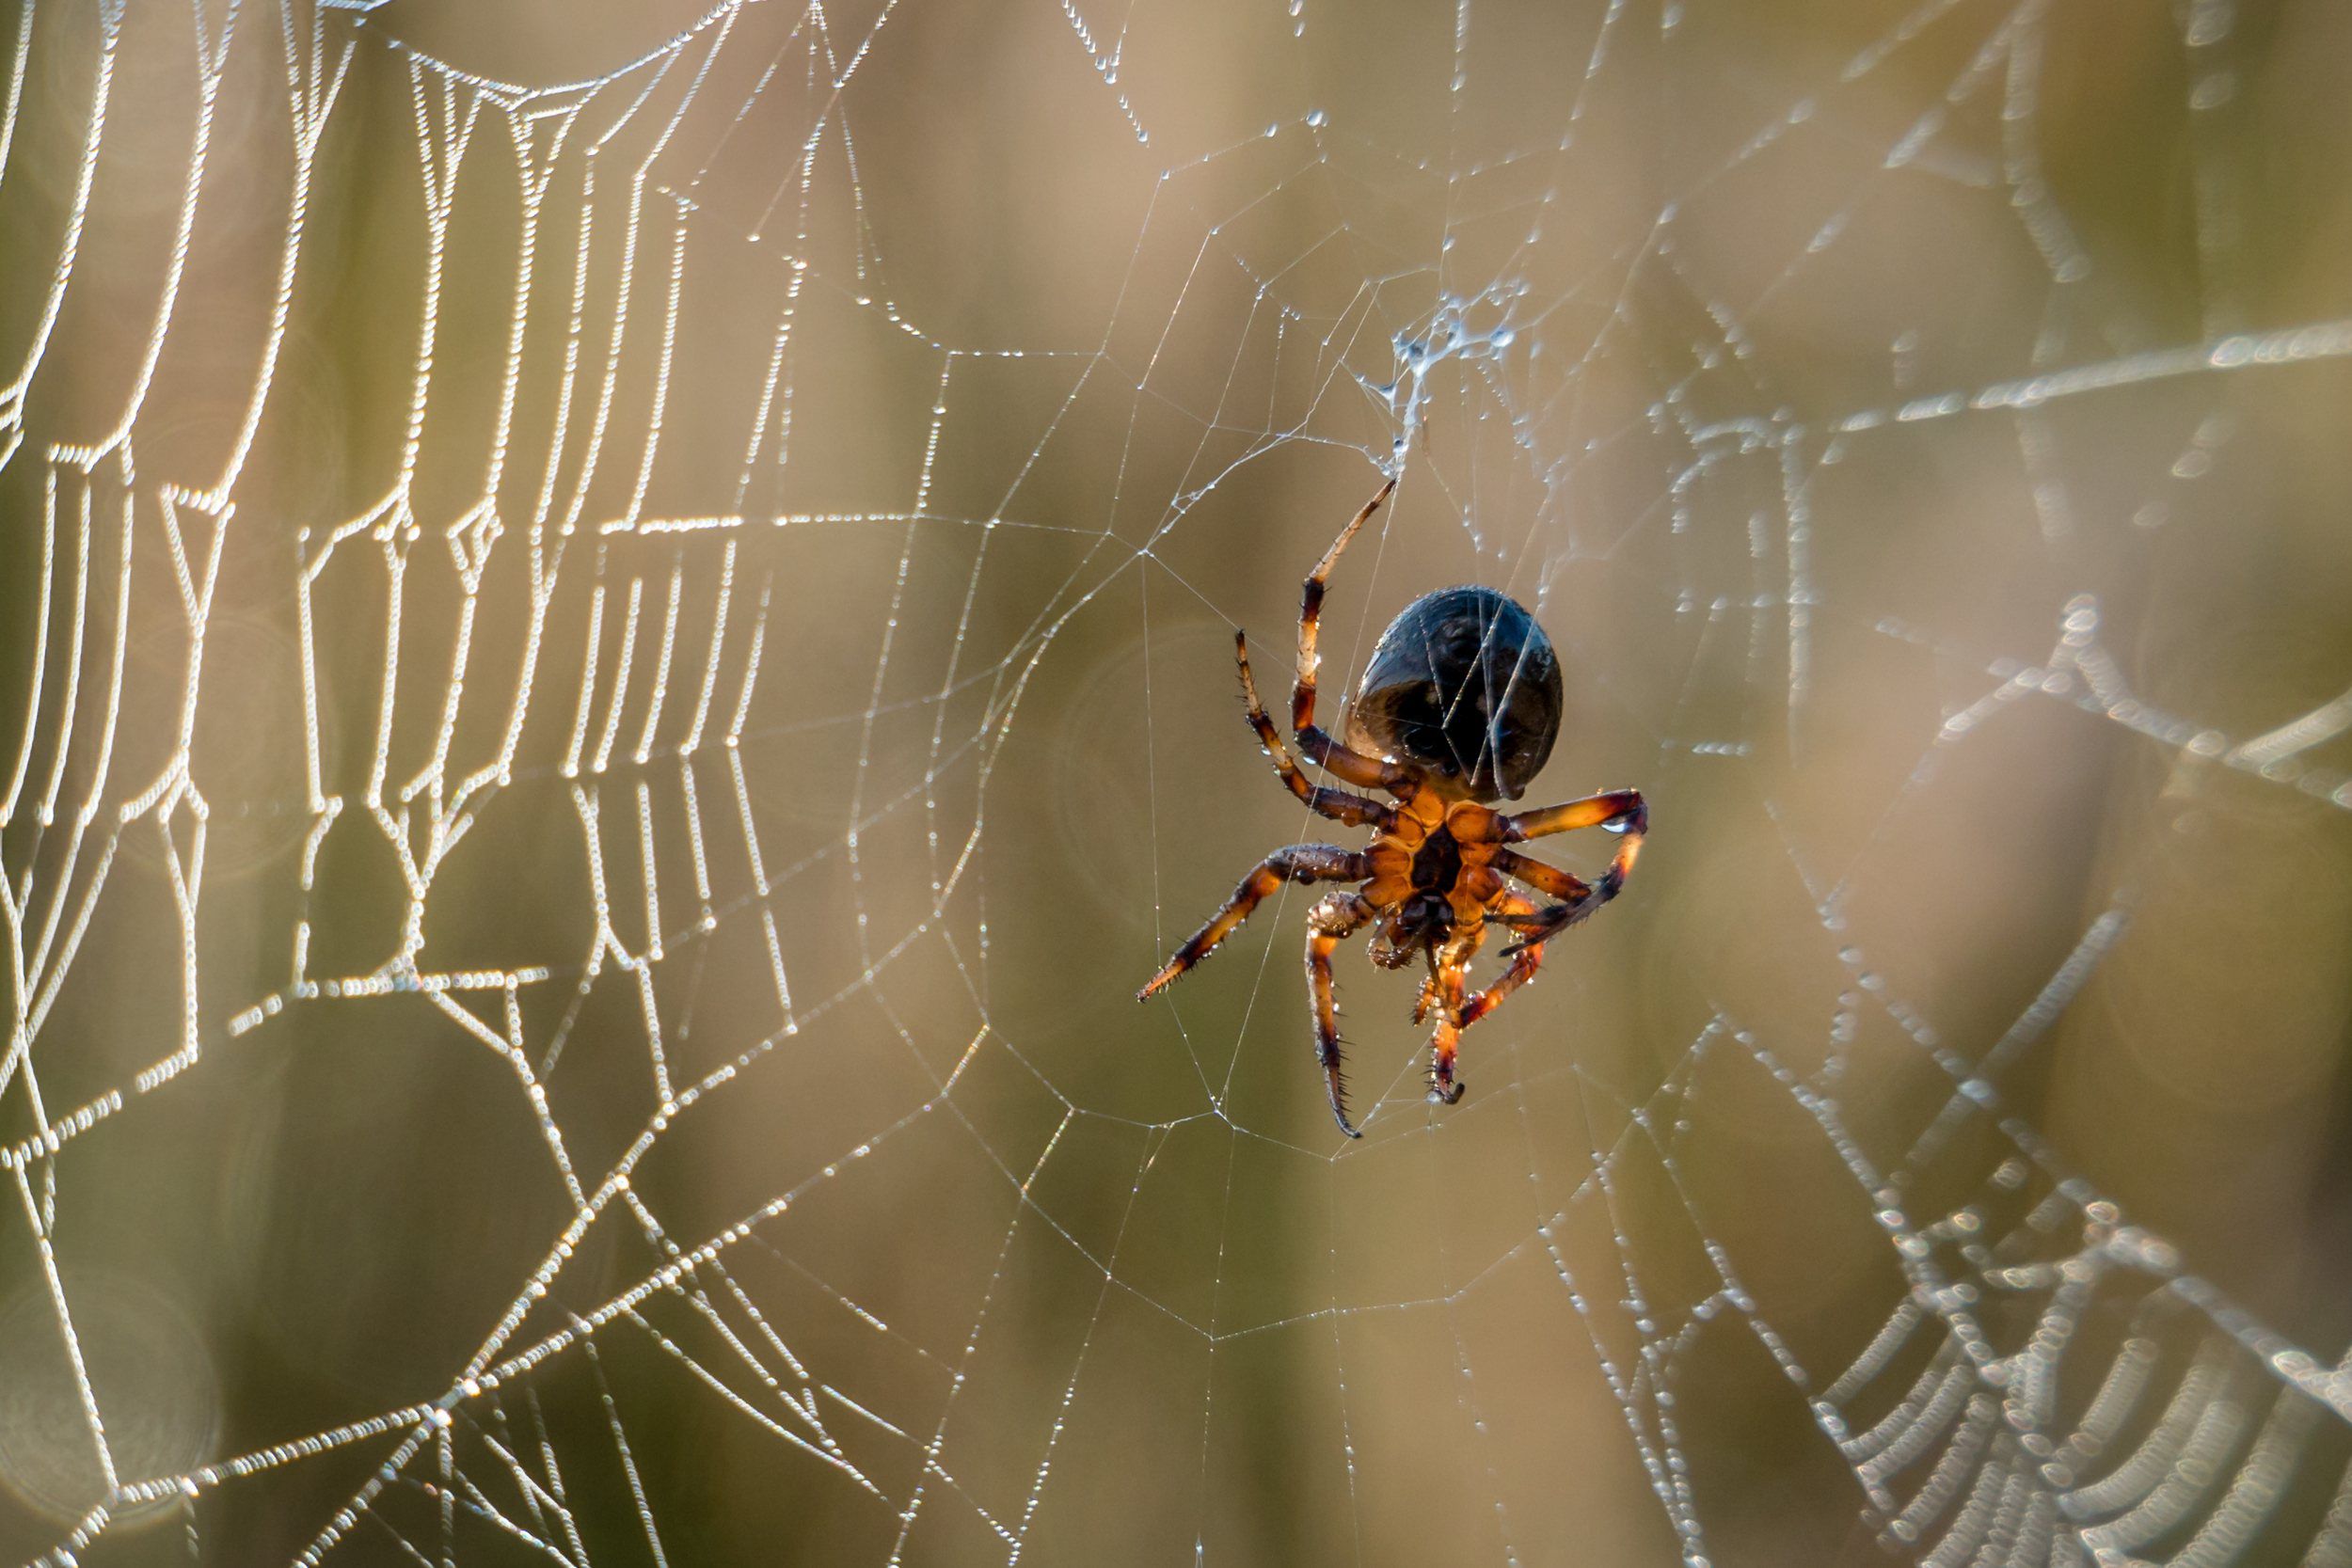 Music Generated By Spider Web: సరదాగా సాలీడుతో కబుర్లు..!